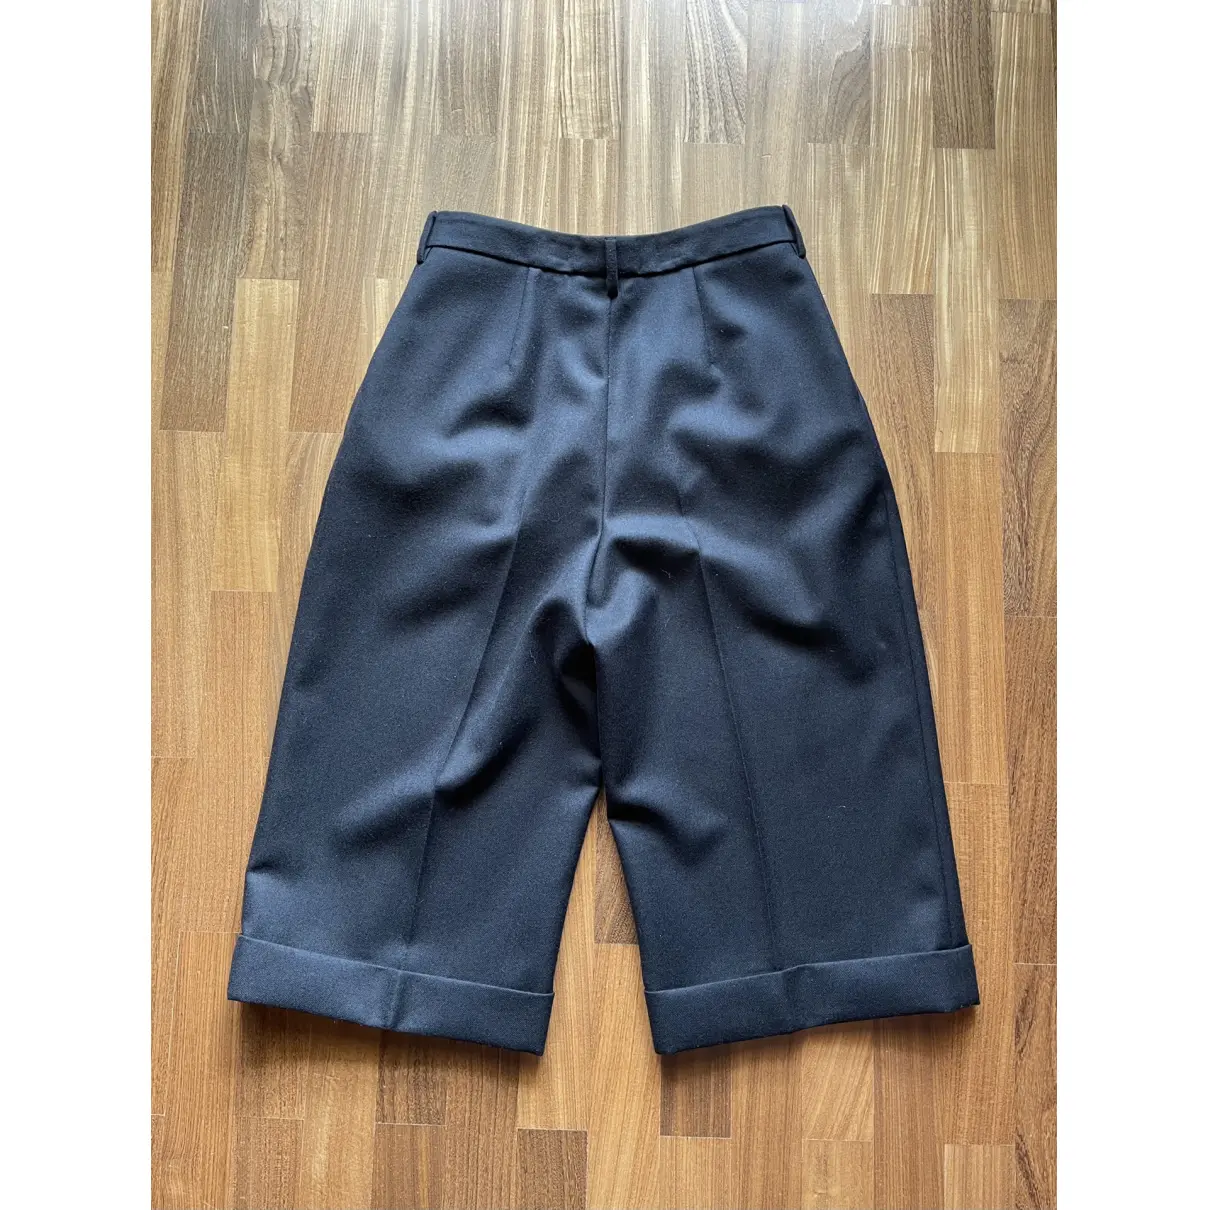 Buy Saint Laurent Wool shorts online